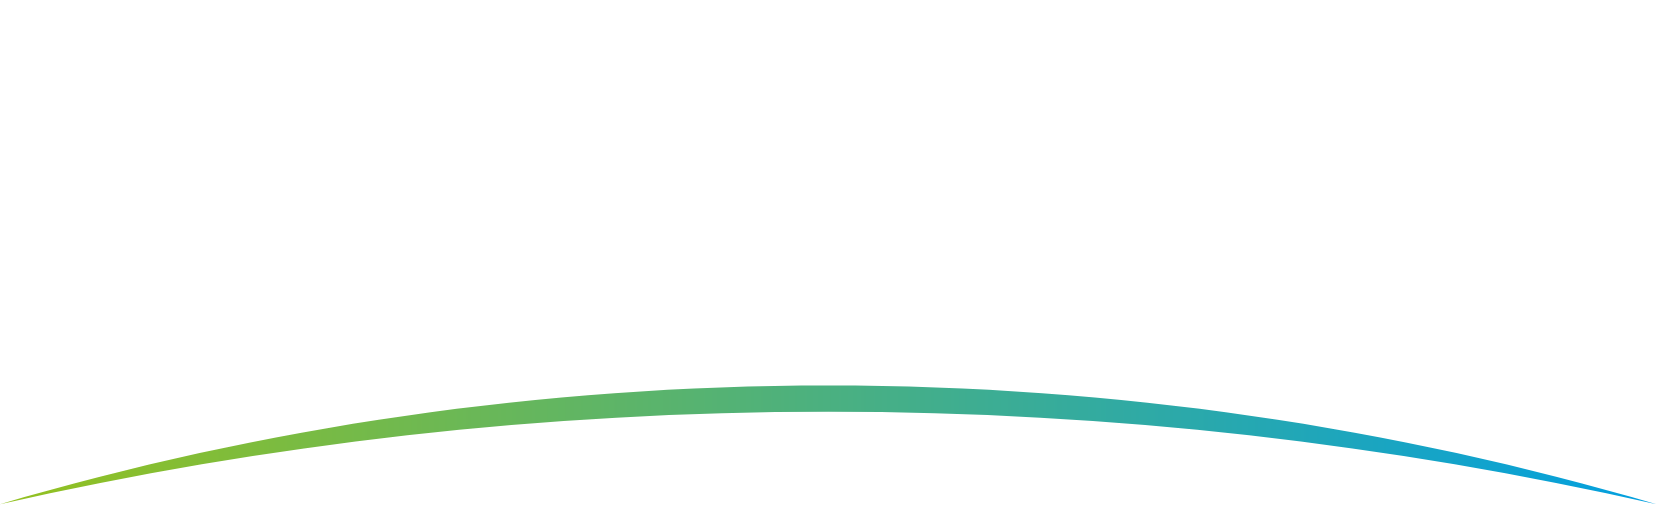 SeaWorld Entertainment Logo groß für dunkle Hintergründe (transparentes PNG)